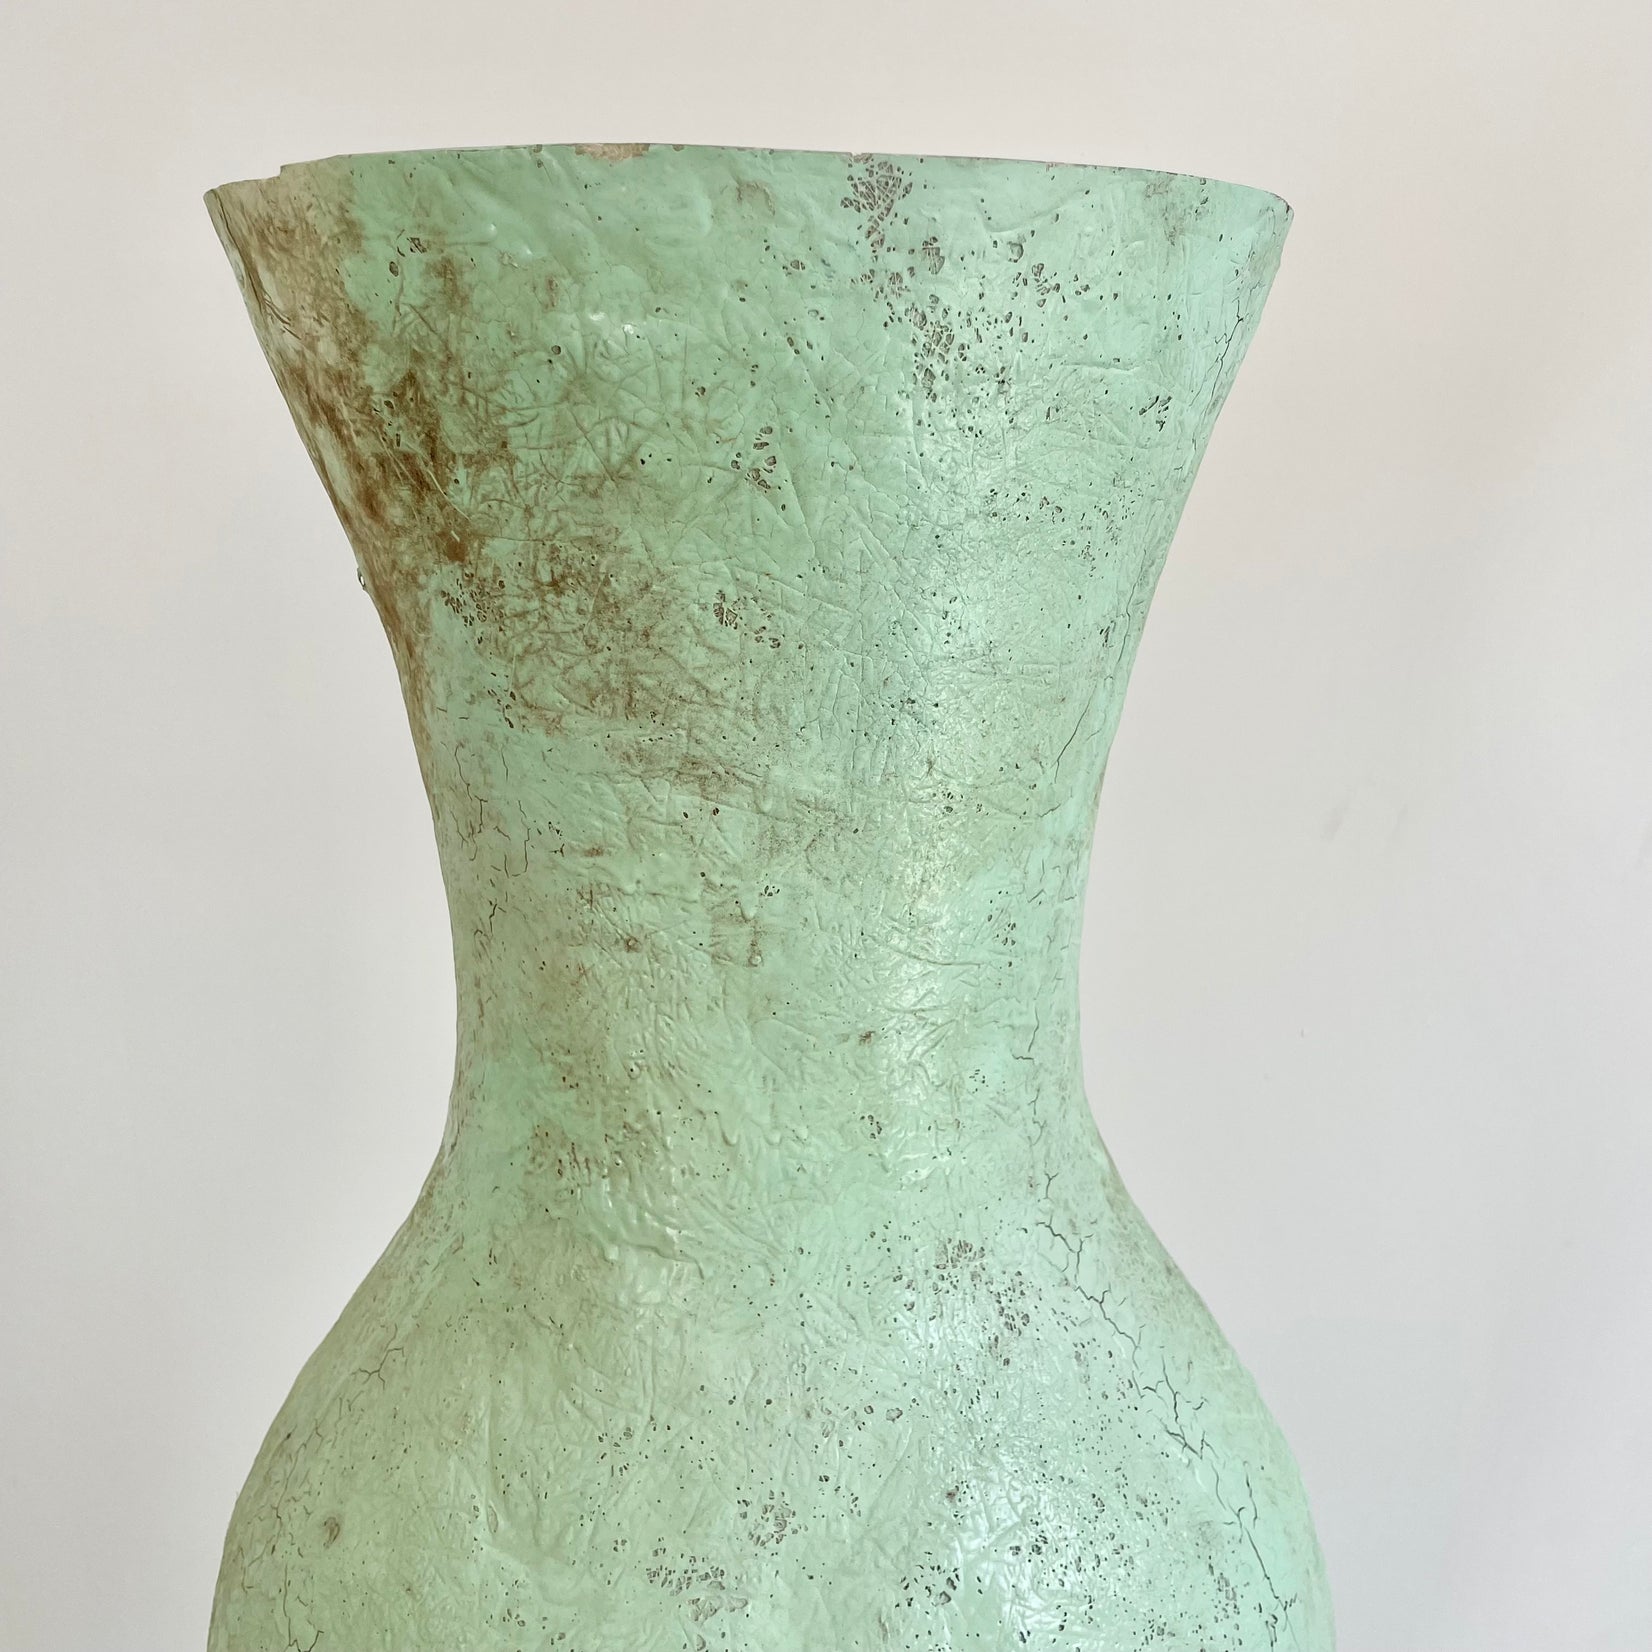 5 Foot Mint Green Fiberglass Vases, Belgium 1960s